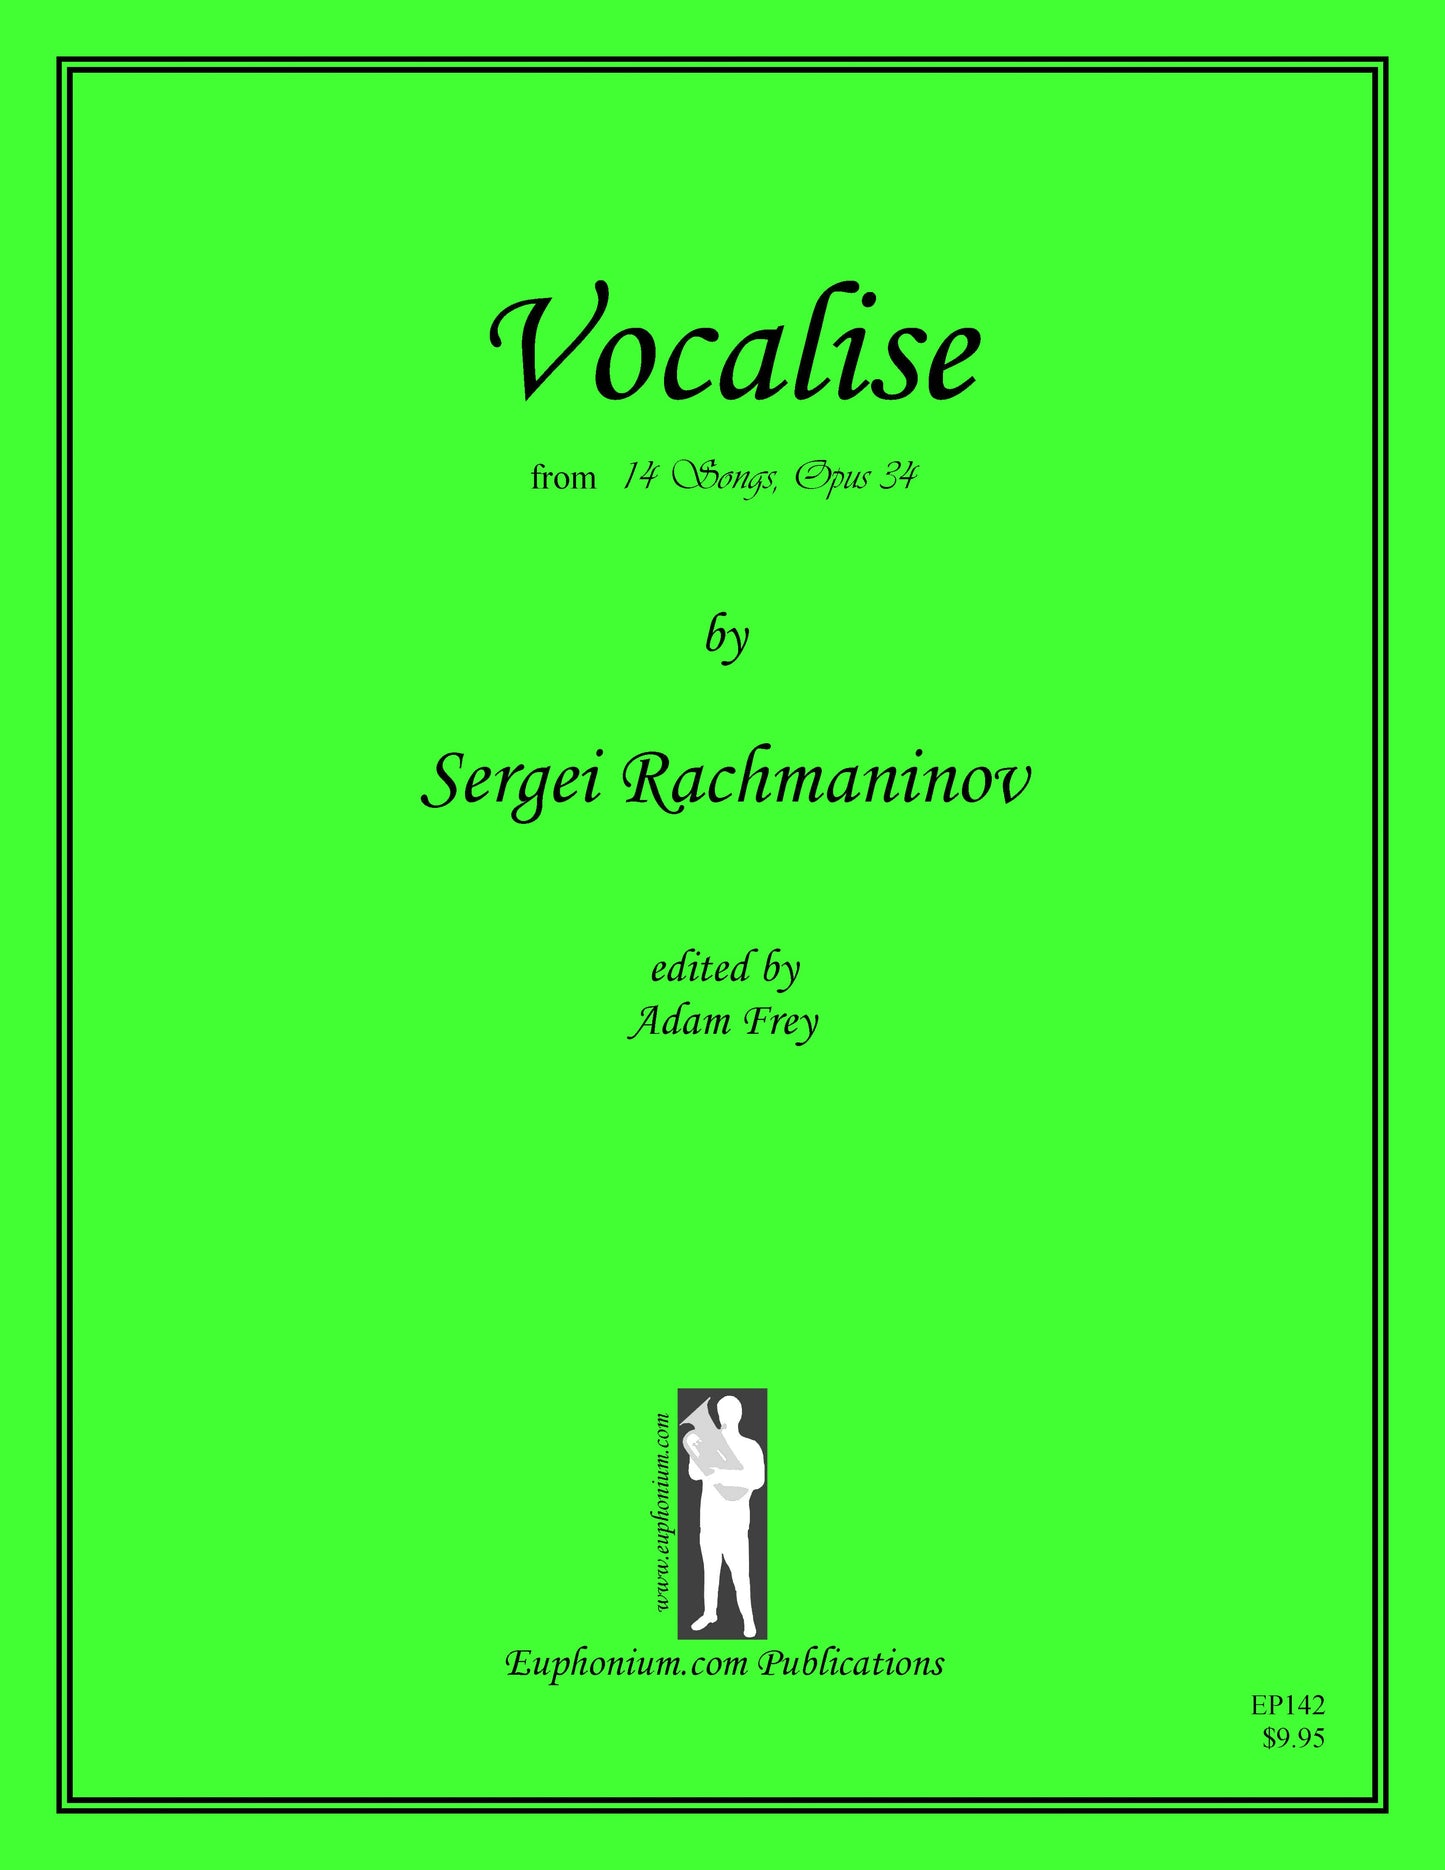 Rachmaninov-Frey - Vocalise DOWNLOAD